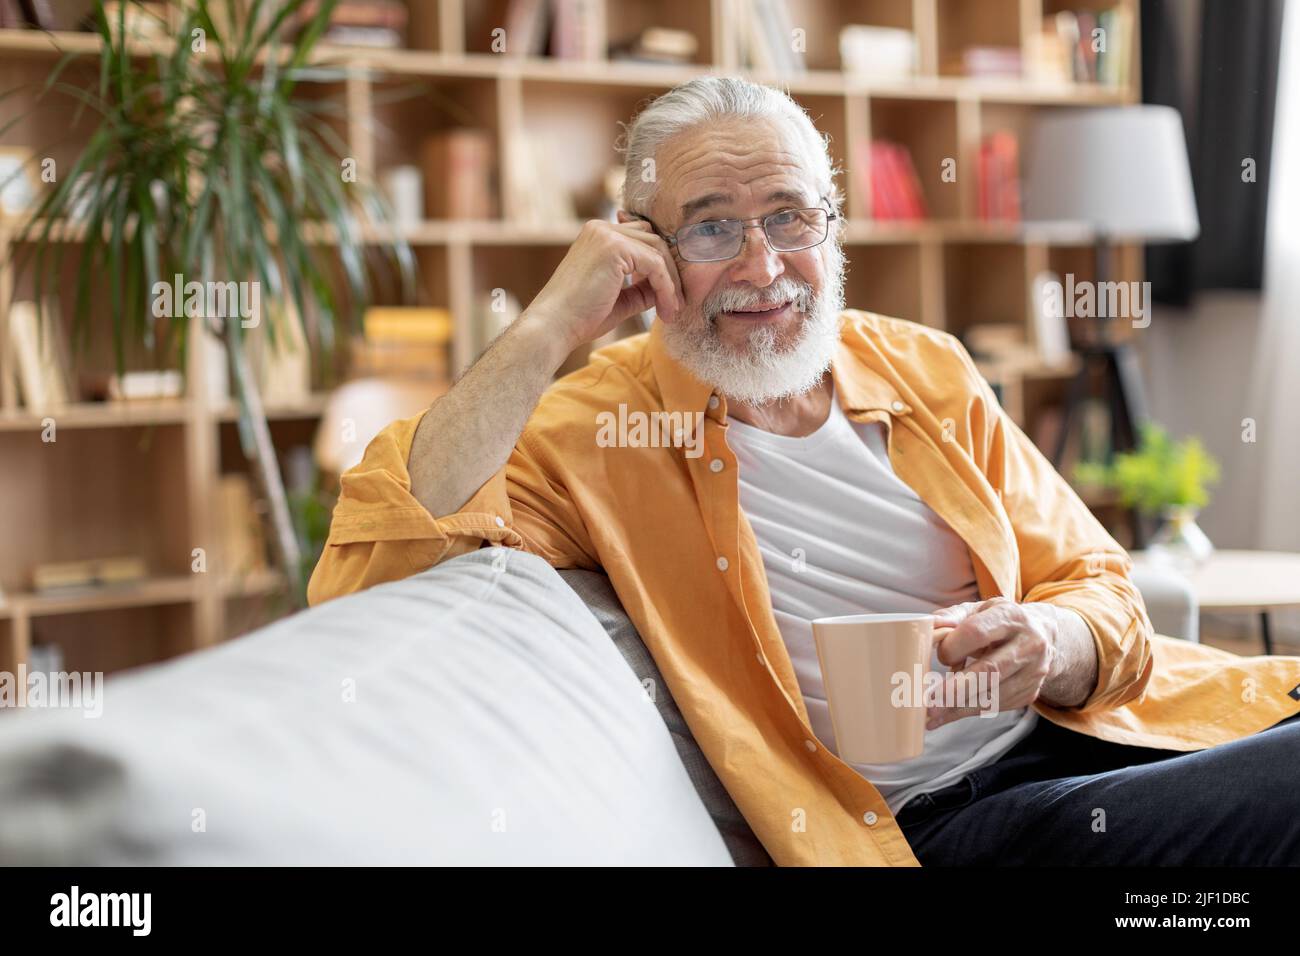 Relaxed elderly man enjoying morning coffee at home Stock Photo